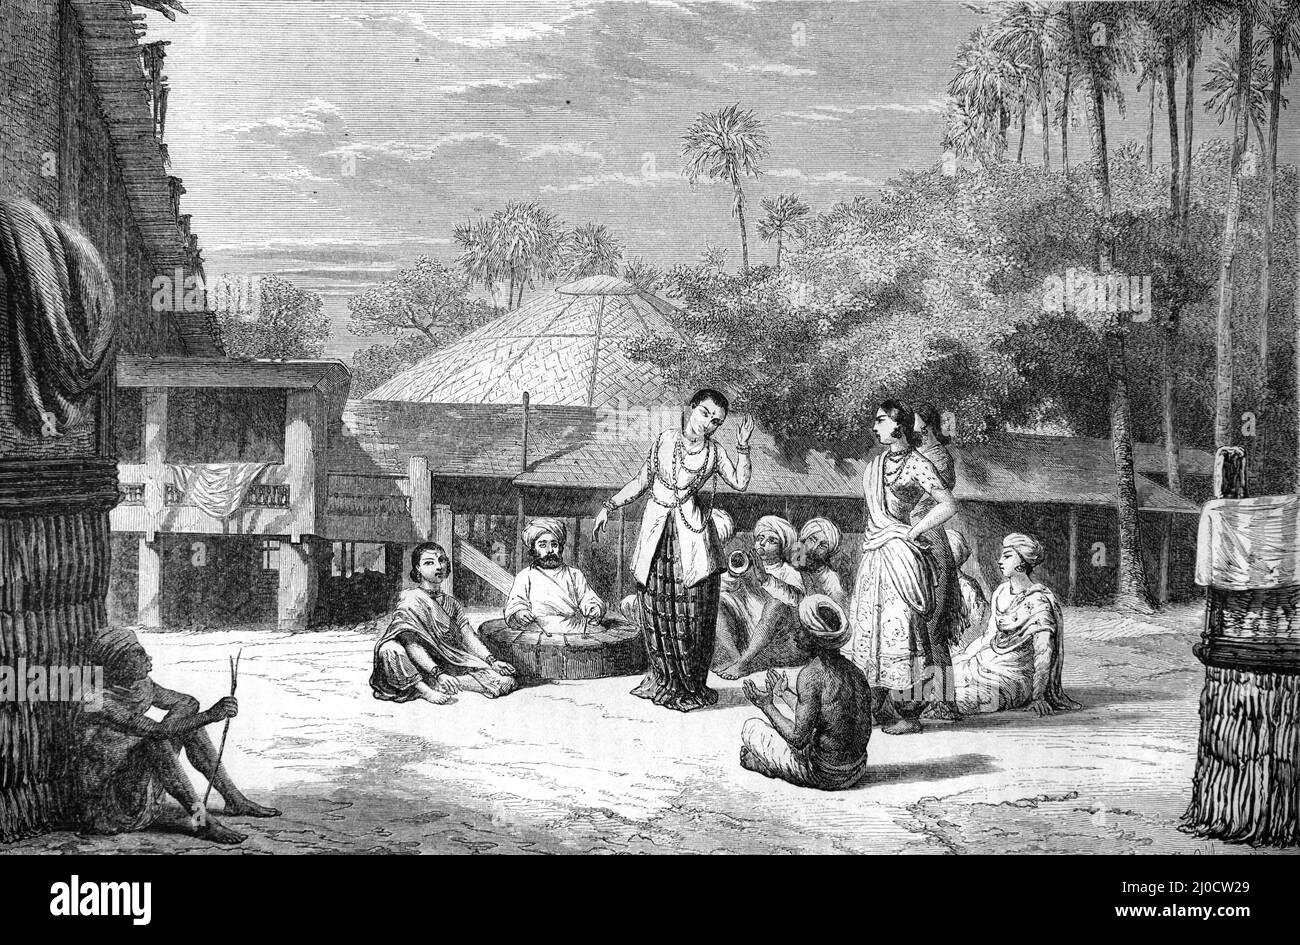 Burmesisches Theater Burma oder Myanmar. Vintage Illustration oder Gravur 1860. Stockfoto